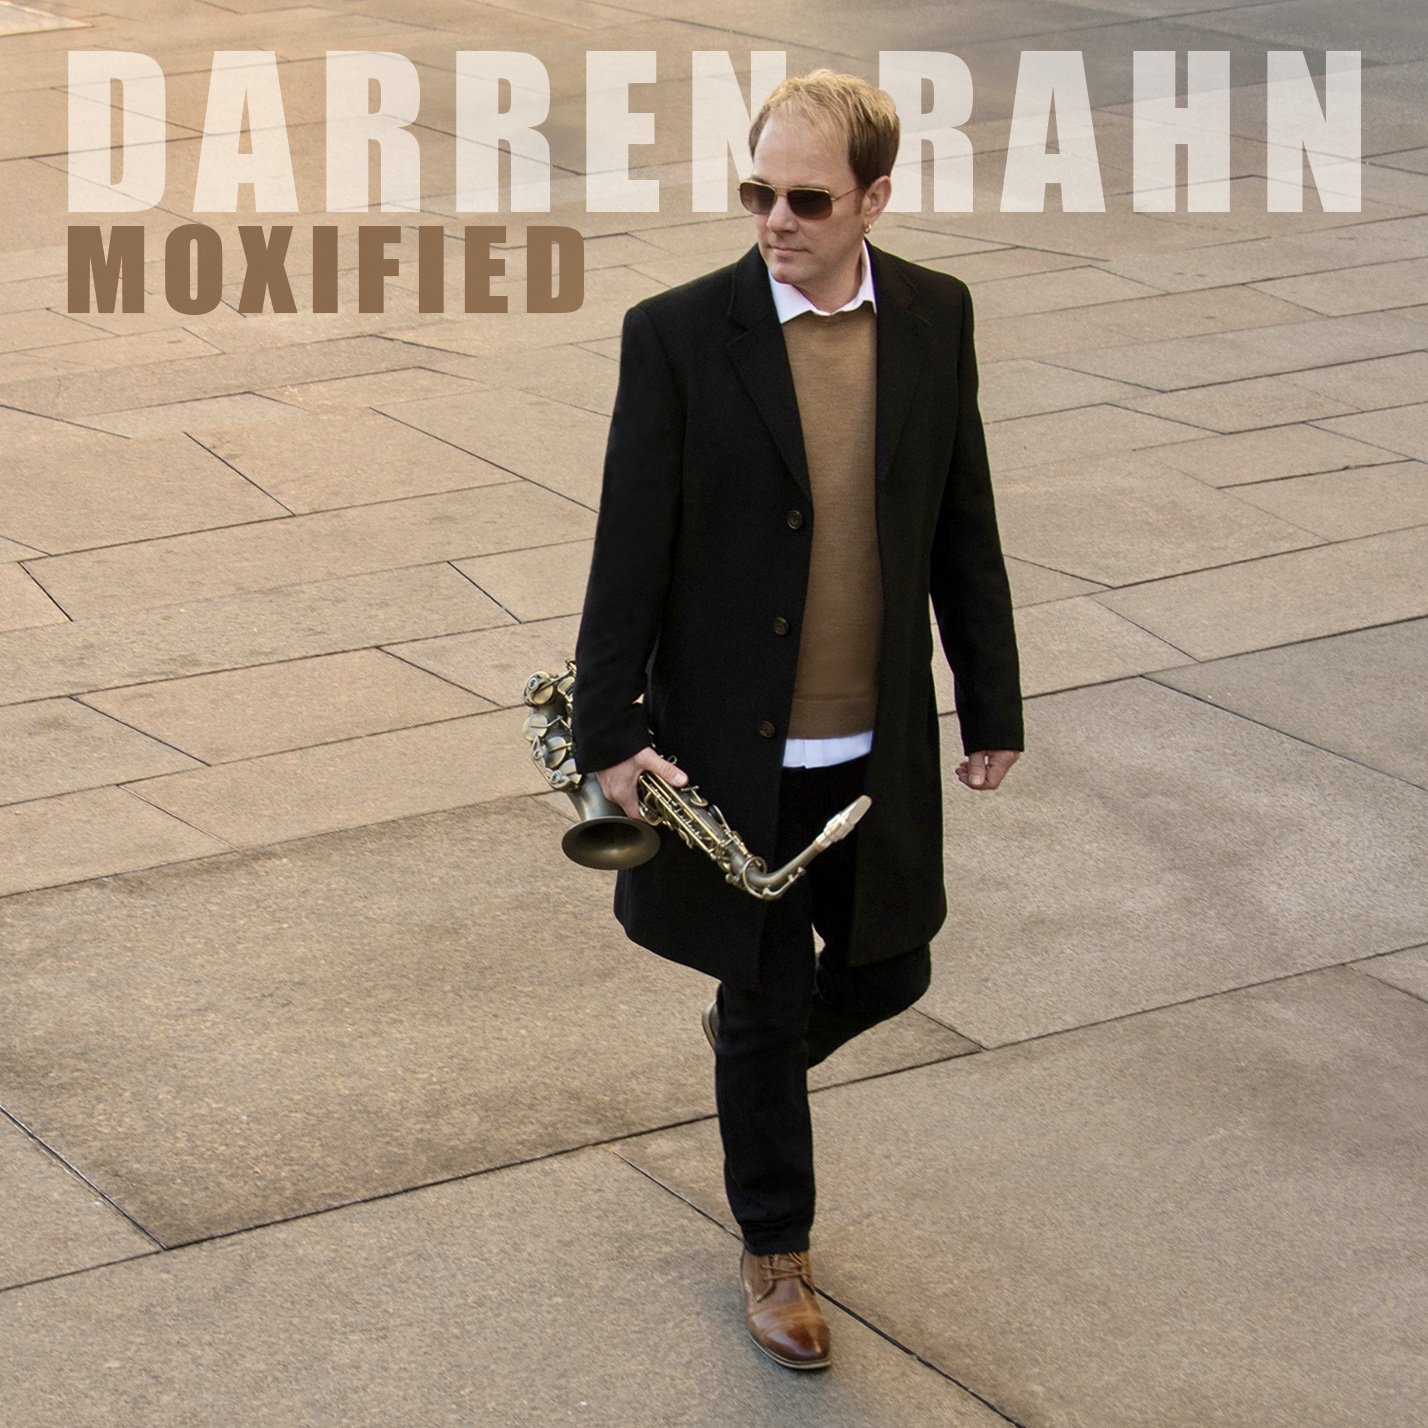 Darren Rahn "Moxified" Single